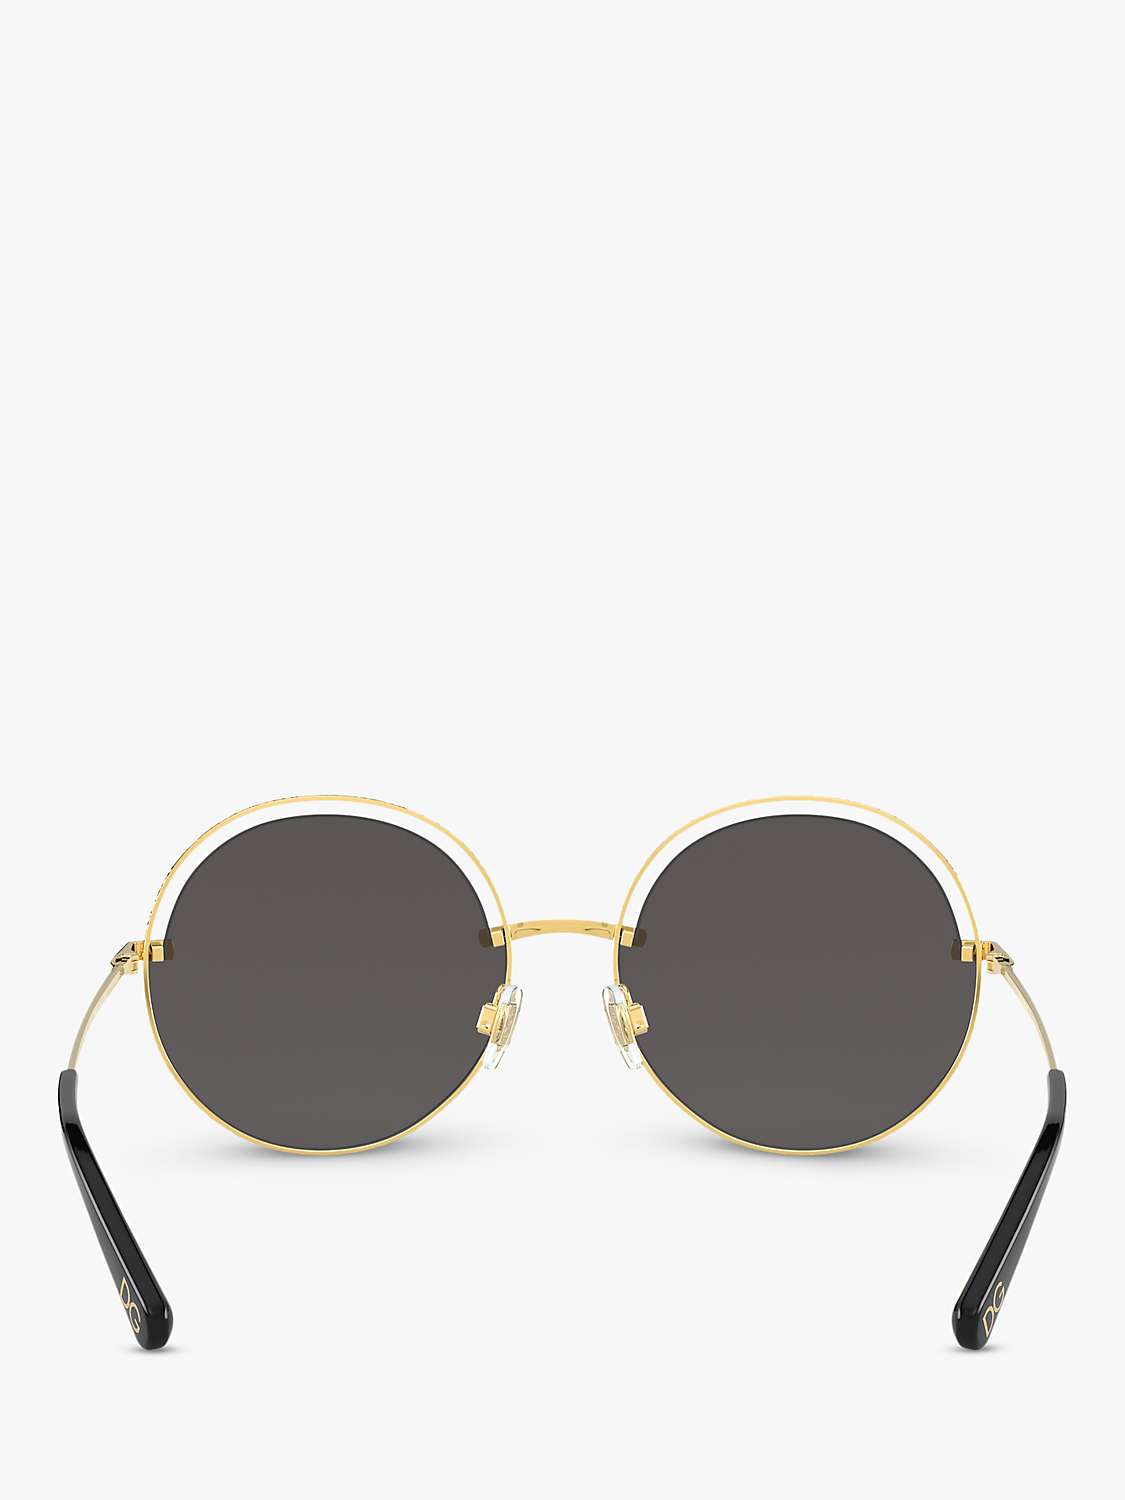 Dolce & Gabbana DG2262 Round Sunglasses, Black at John Lewis & Partners